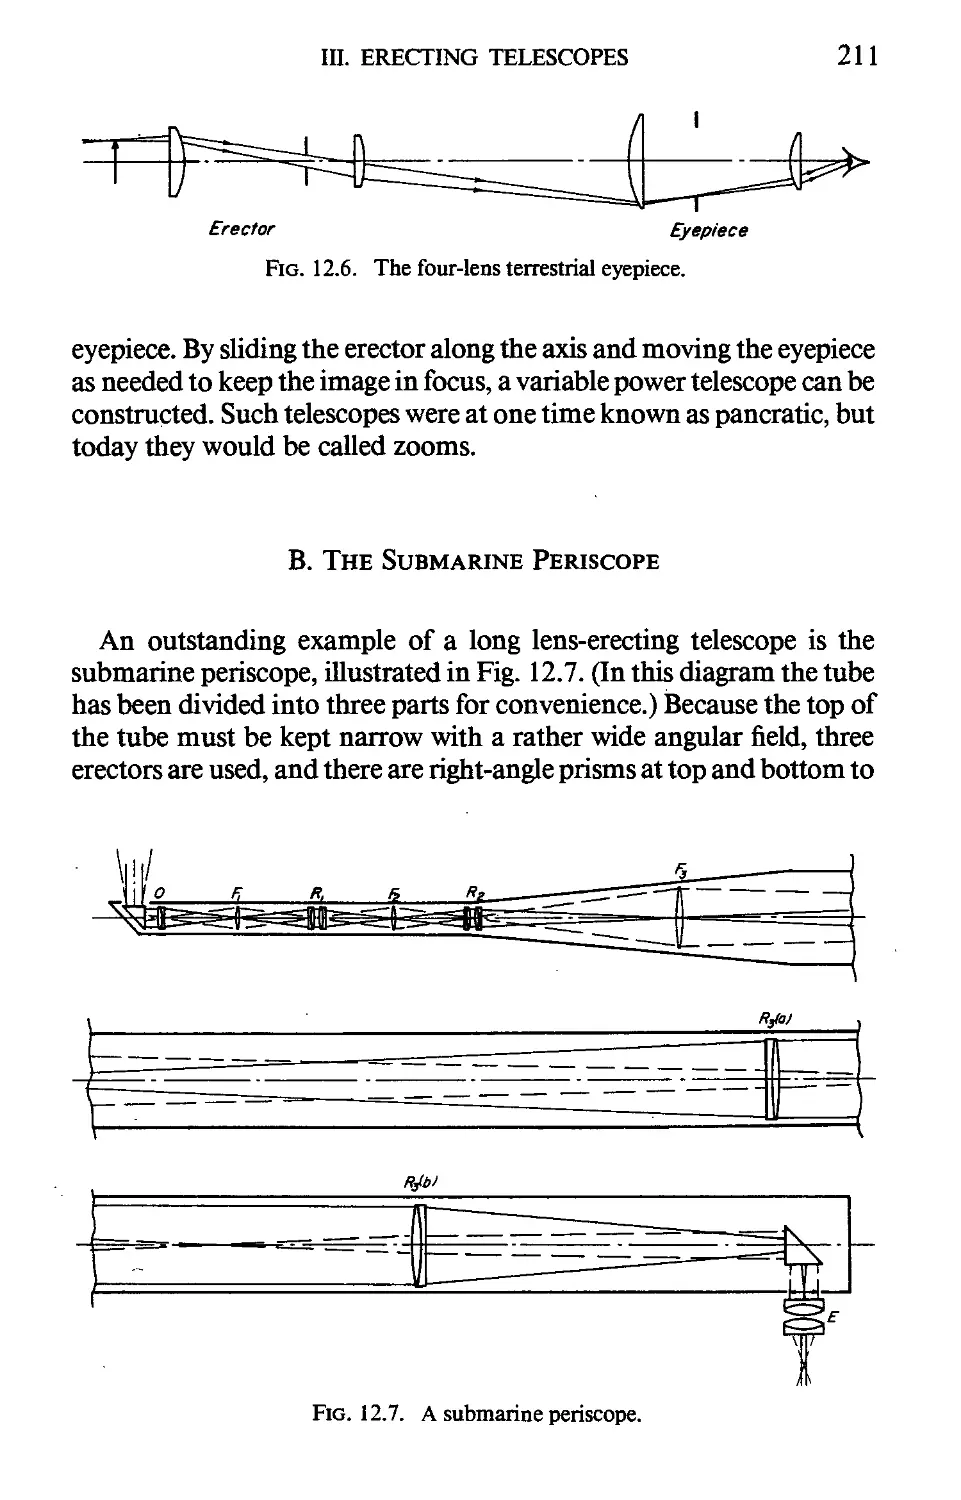 B. The Submarine Periscope